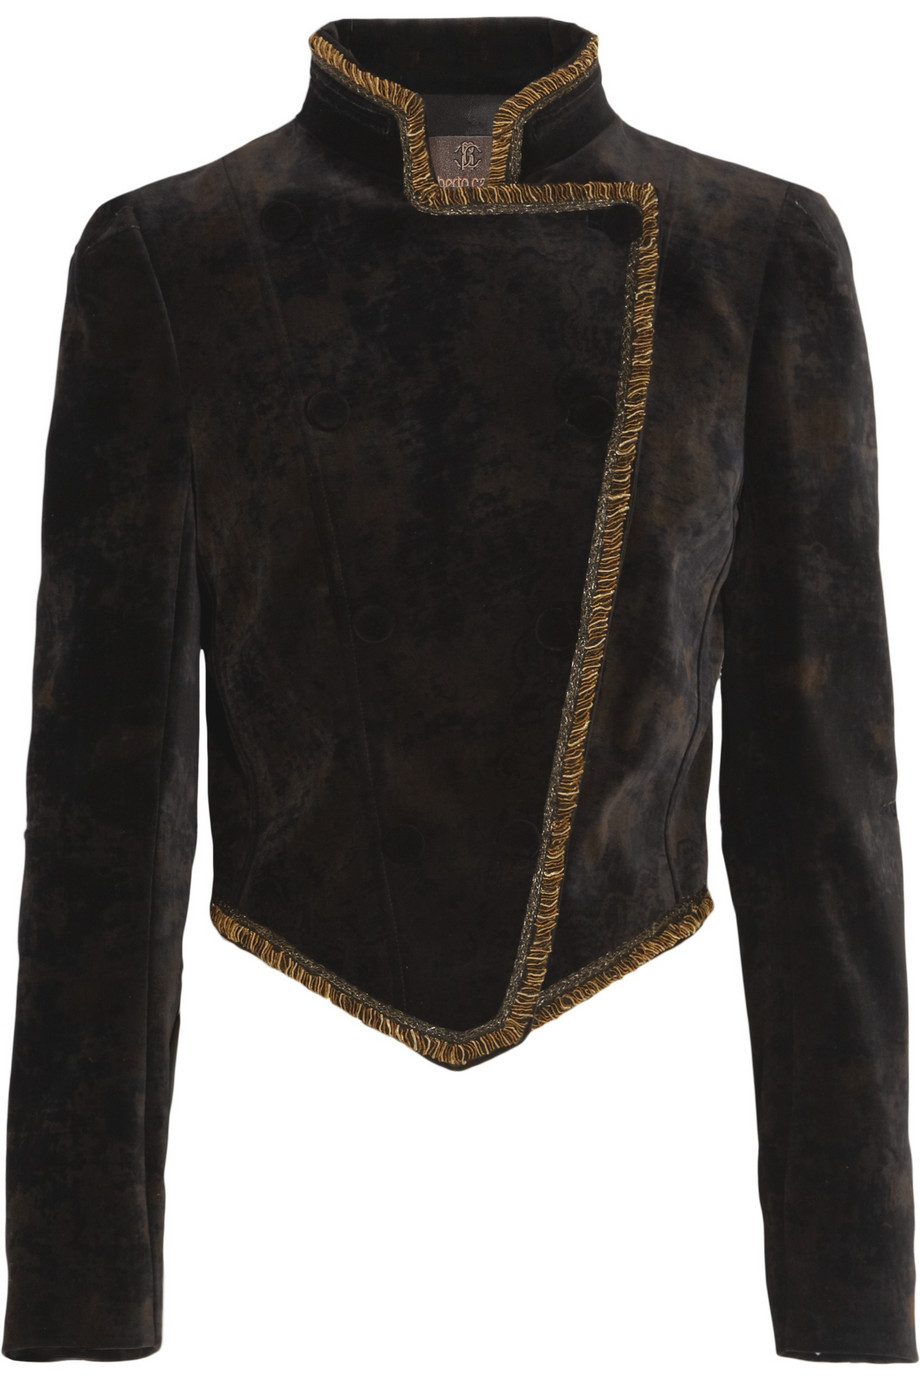 Roberto Cavalli black and brown jacket